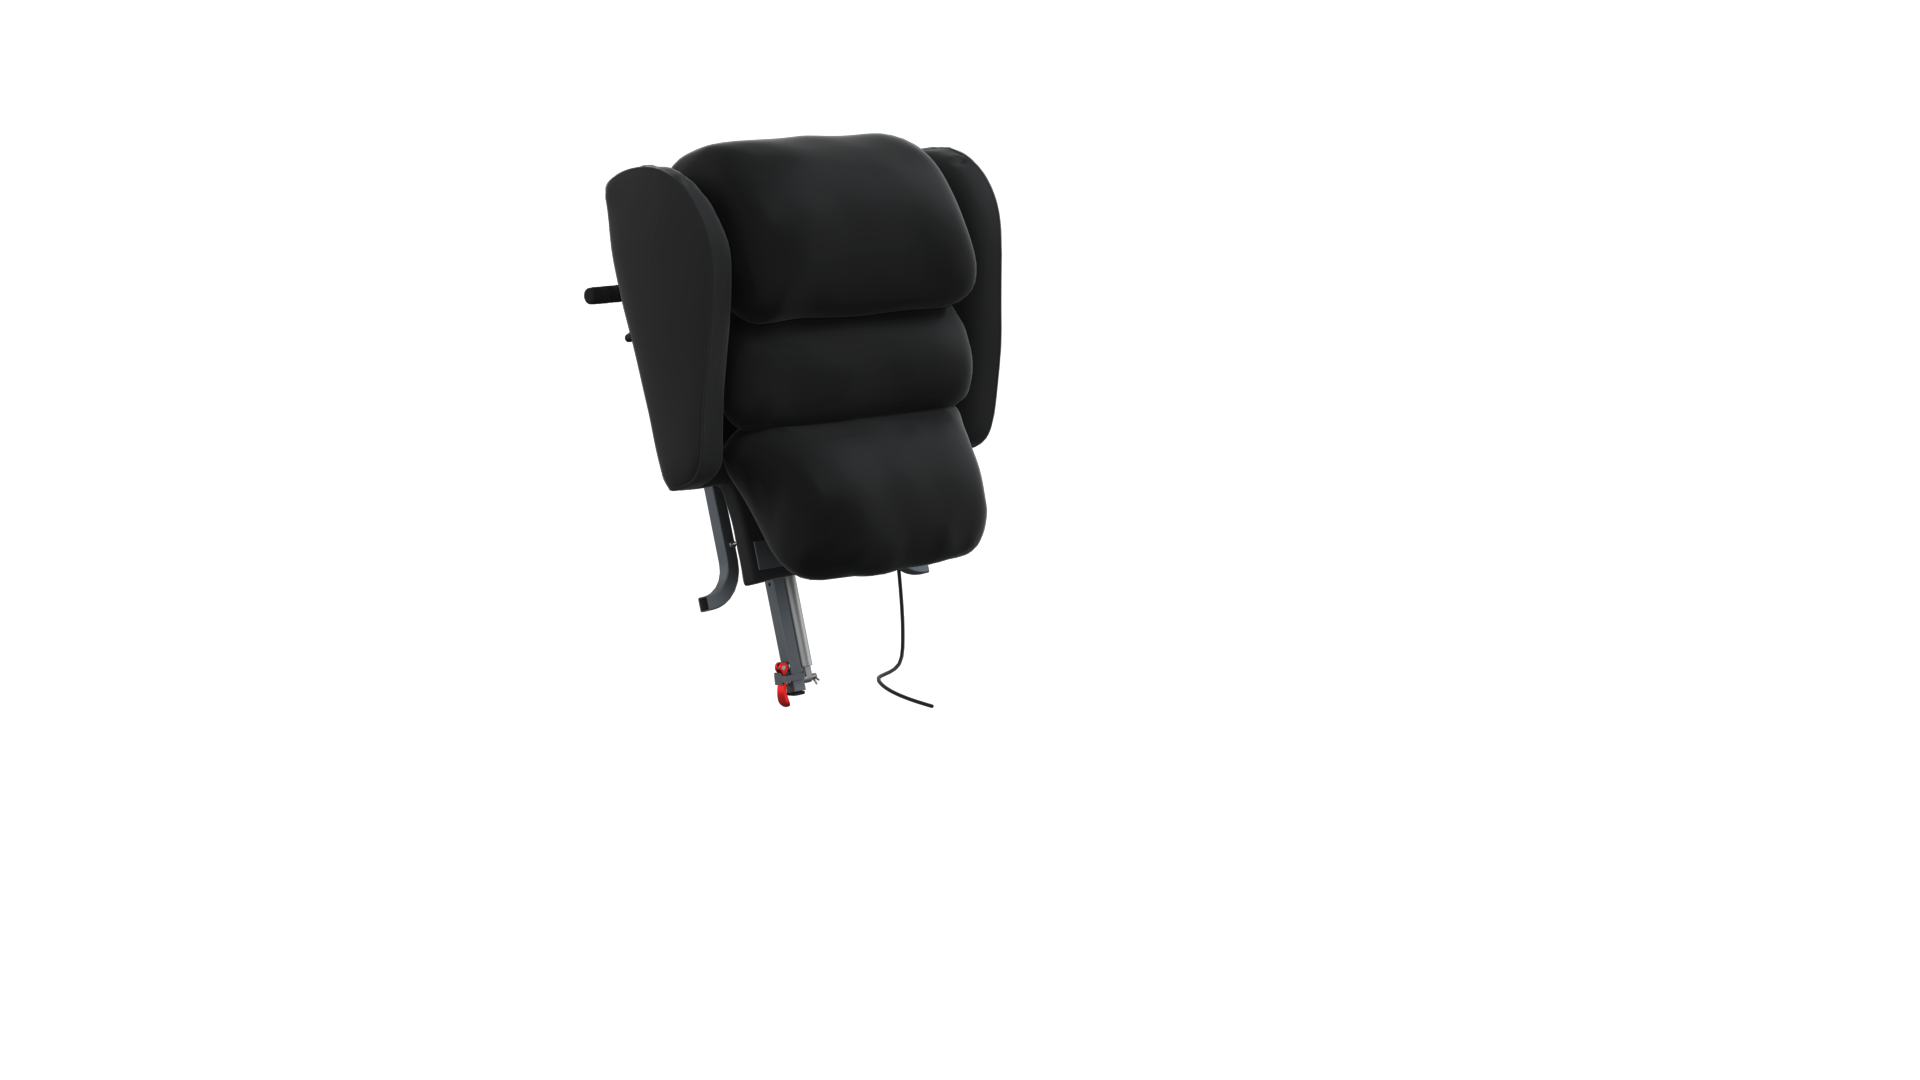 Accora Configura Advance Comfort Chair CHAIR-0-SC3-050 Geri Chairs